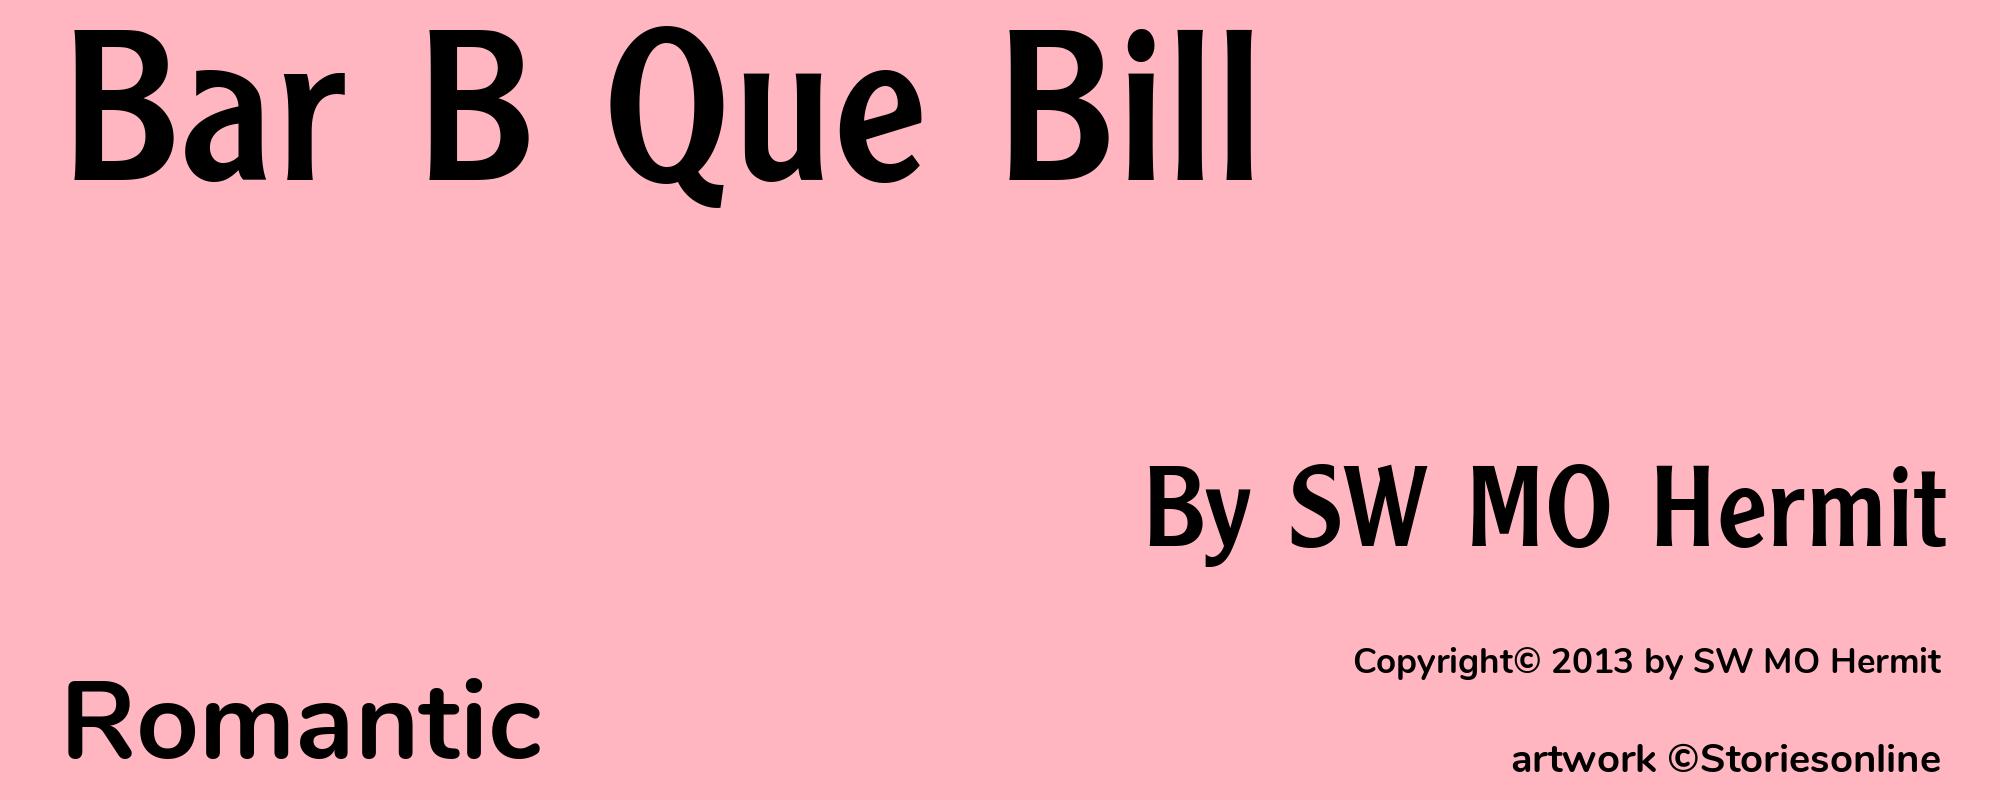 Bar B Que Bill - Cover